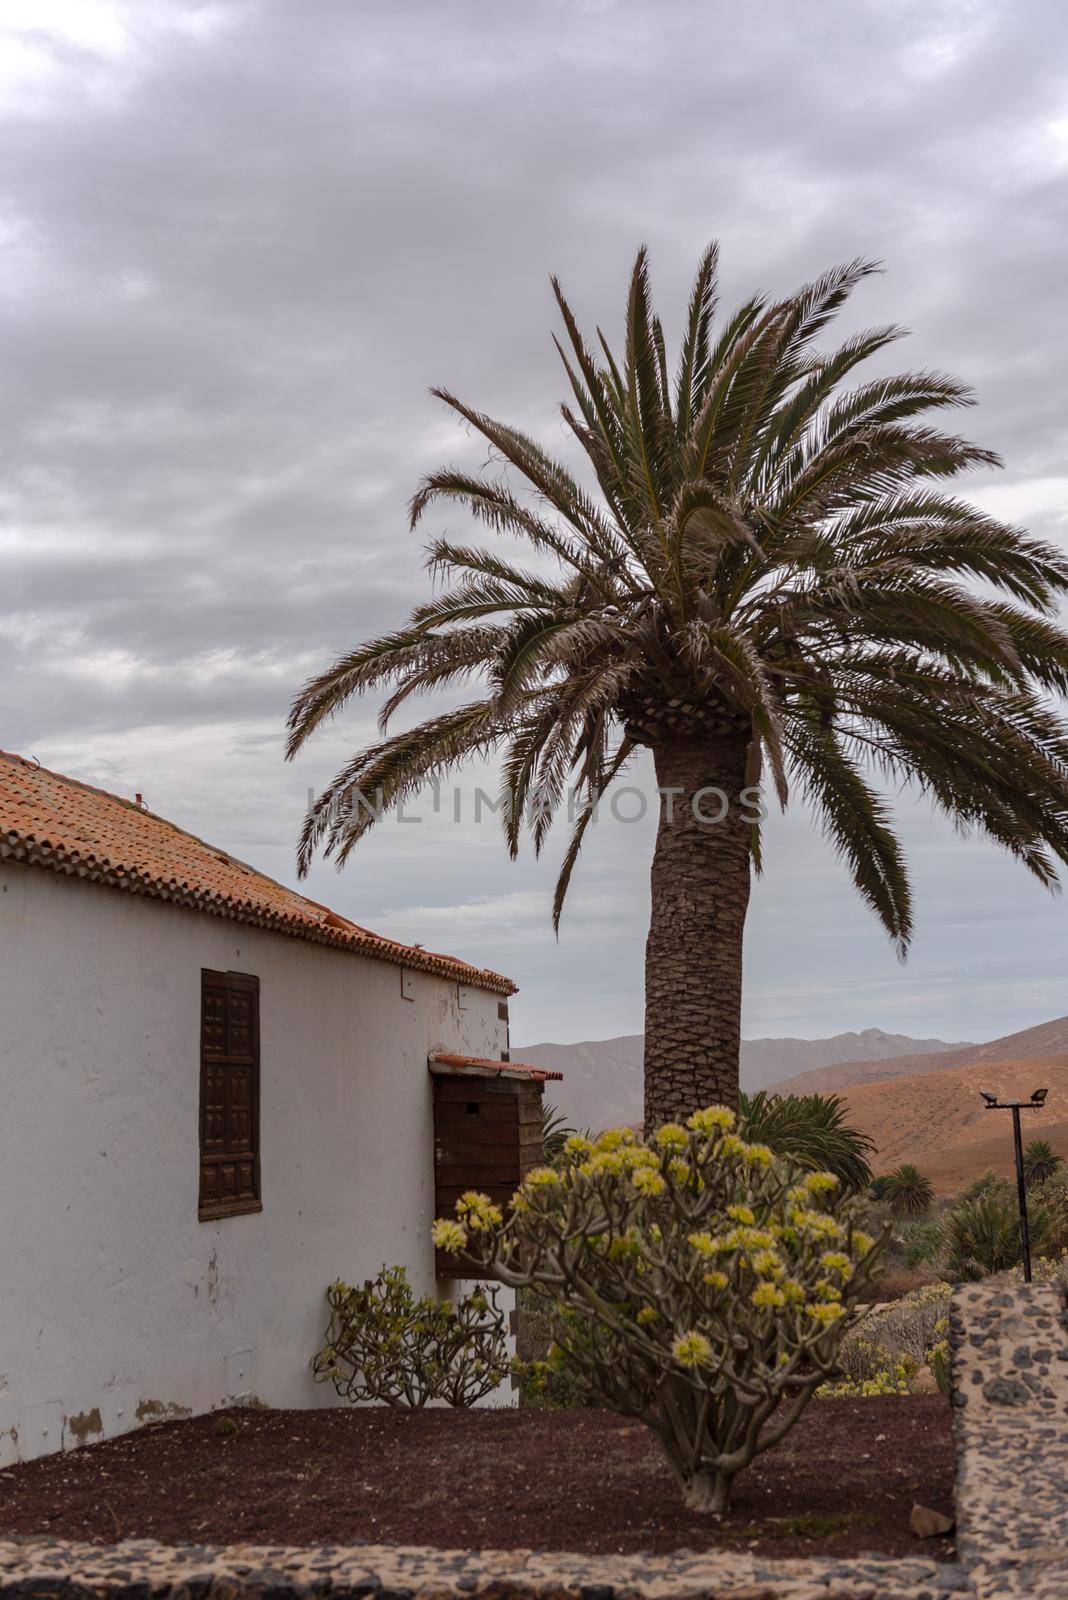 Betancuria, Fuerteventura, Spain : 2020 October 6 :  Typical Canarian house in Bentancuria on the island of Fuerteventura in Spain in summer.